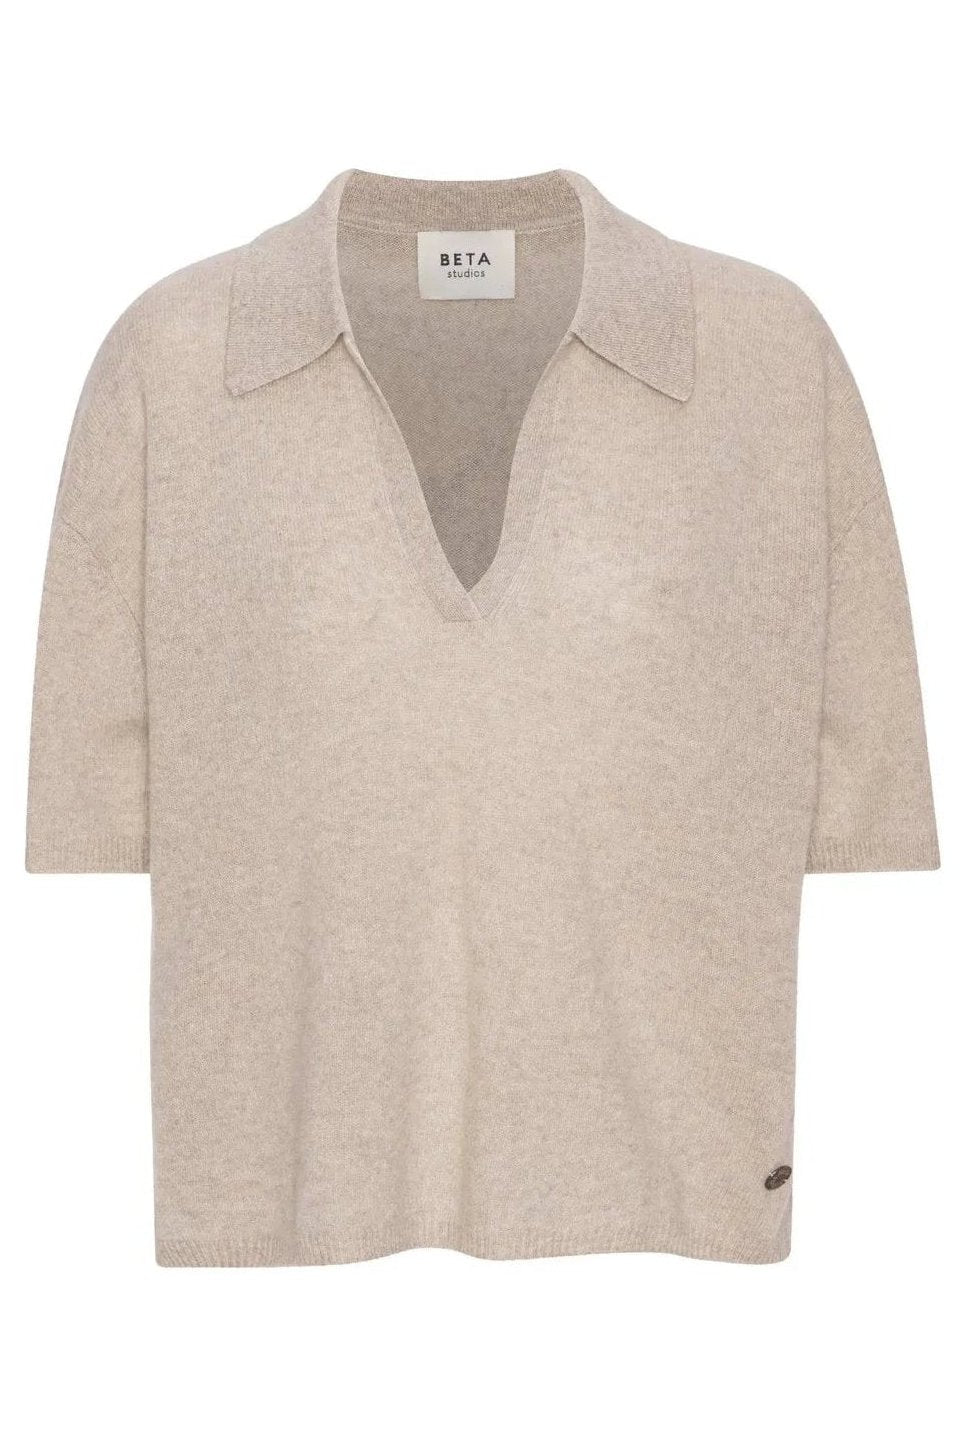 Sweater | Beta Studios Fie Polo Tee Cashmere, sand melange